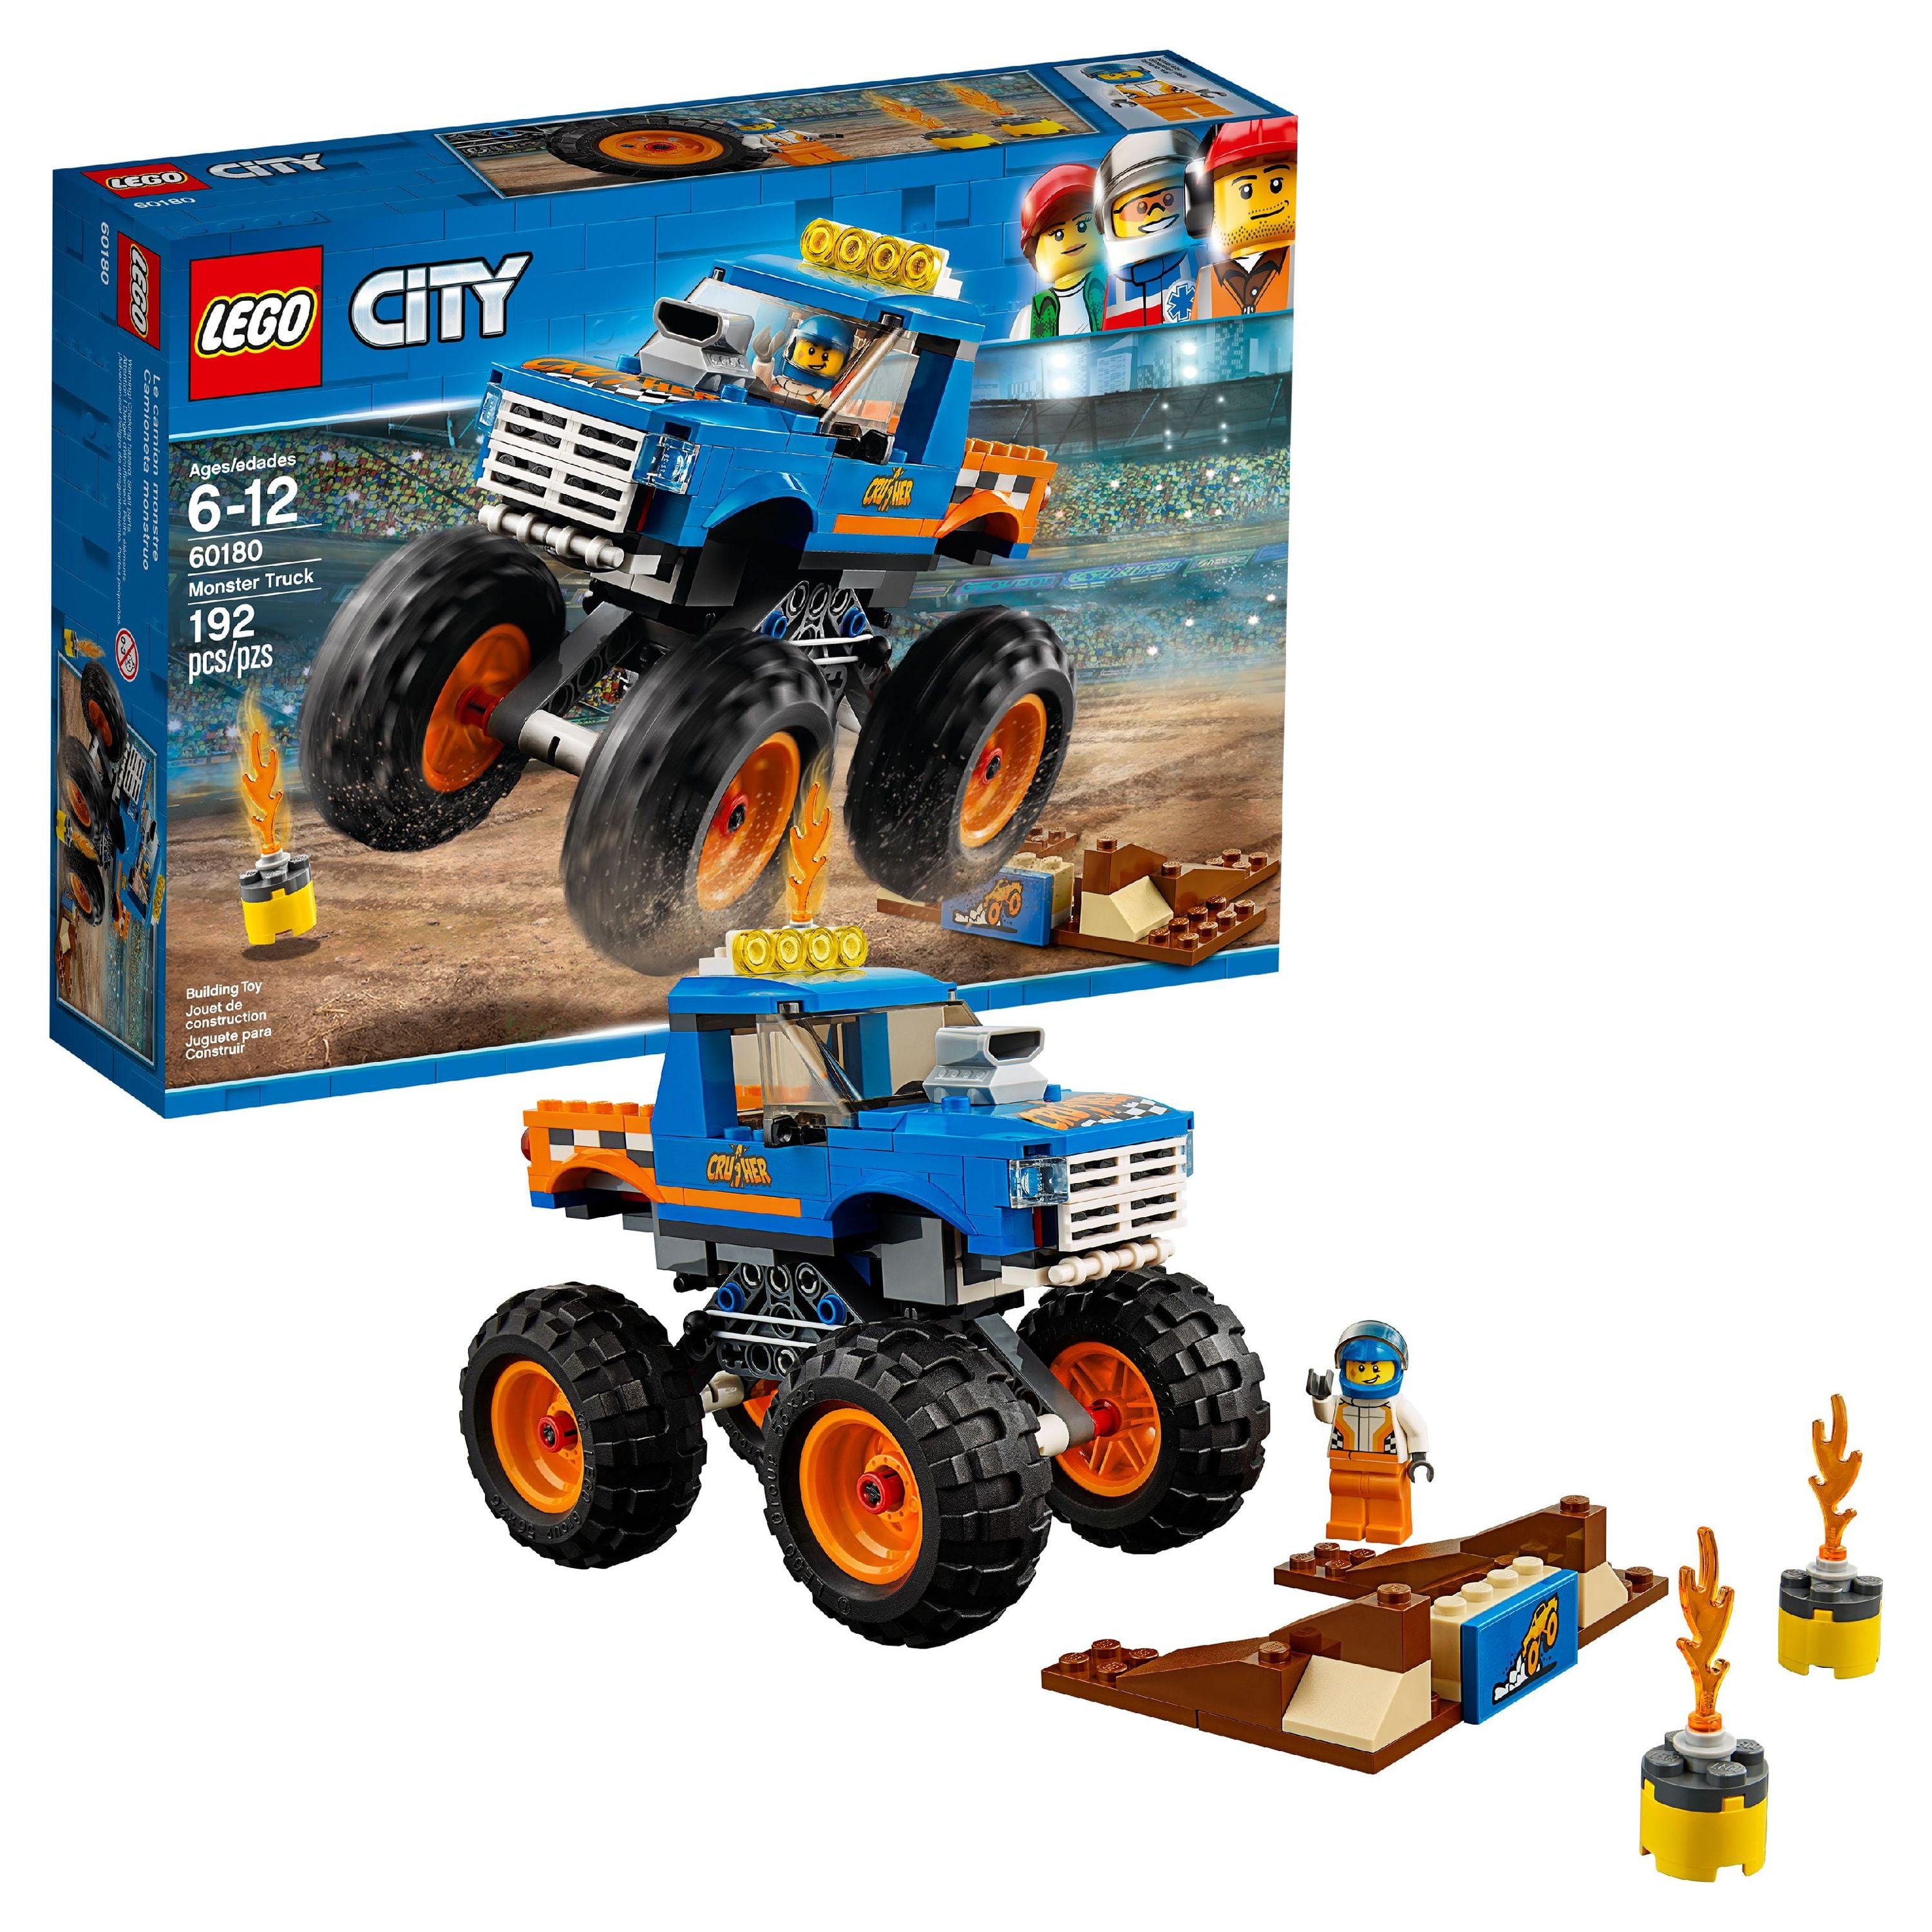 60180 MONSTER TRUCK lego LEGOS city town NEW 4x4 kit set race bigfoot  crusher